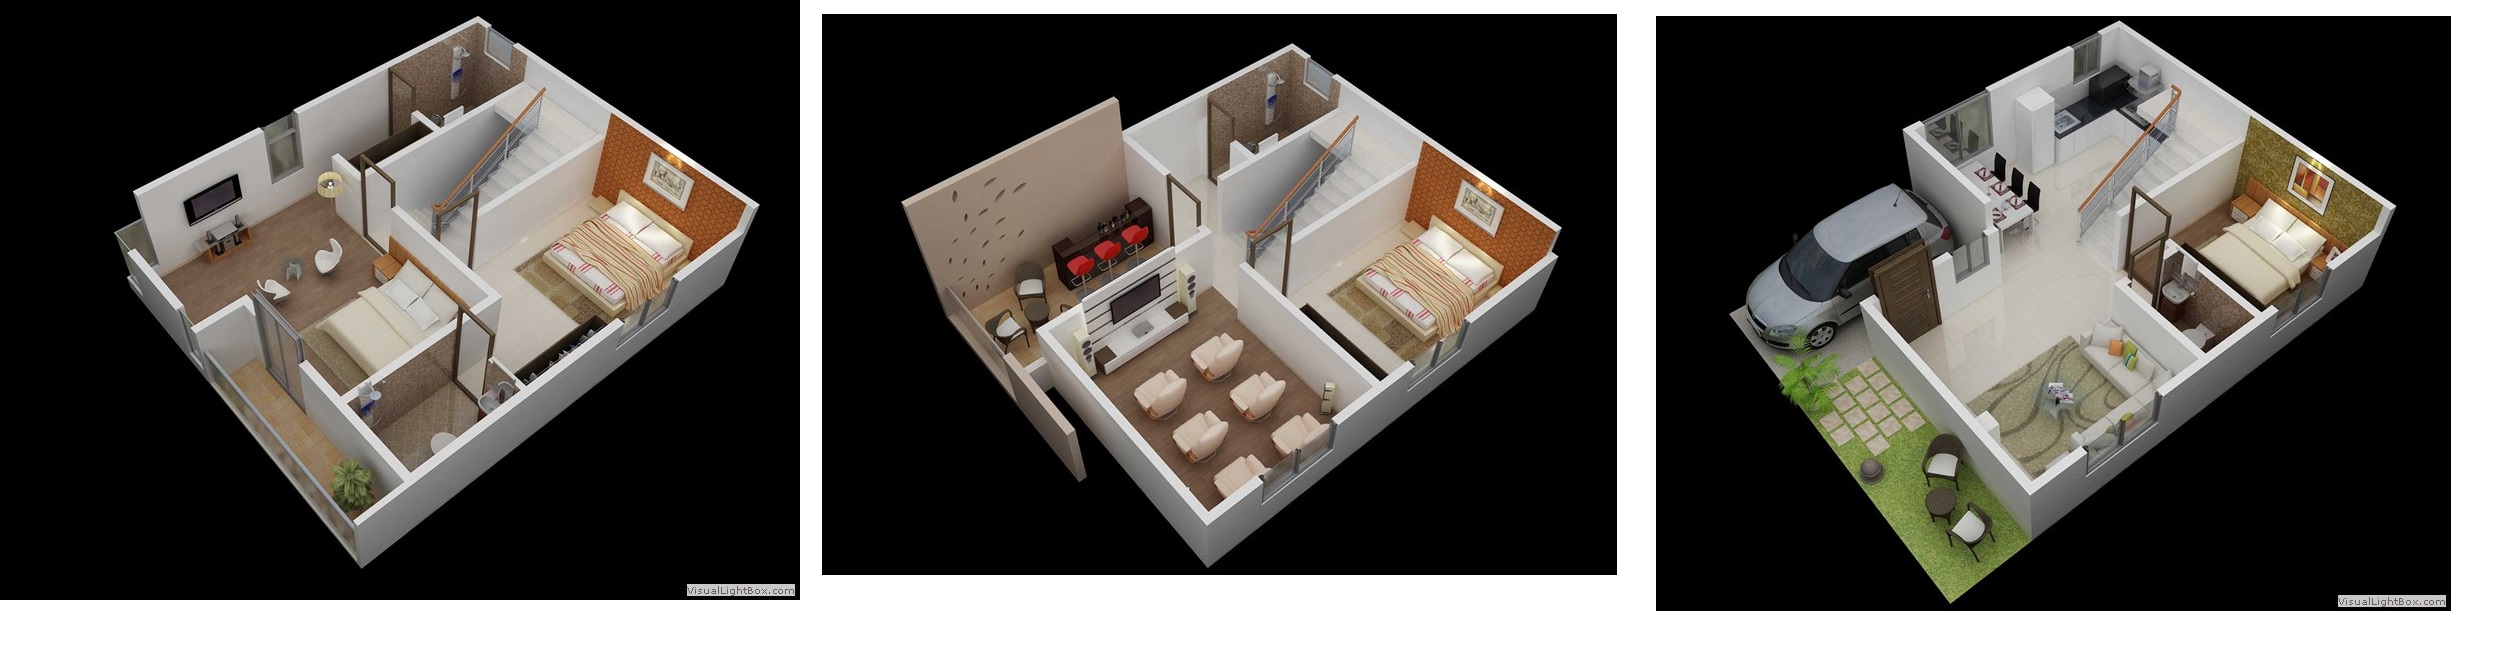 M1 Antaliea Homes Floor Plan